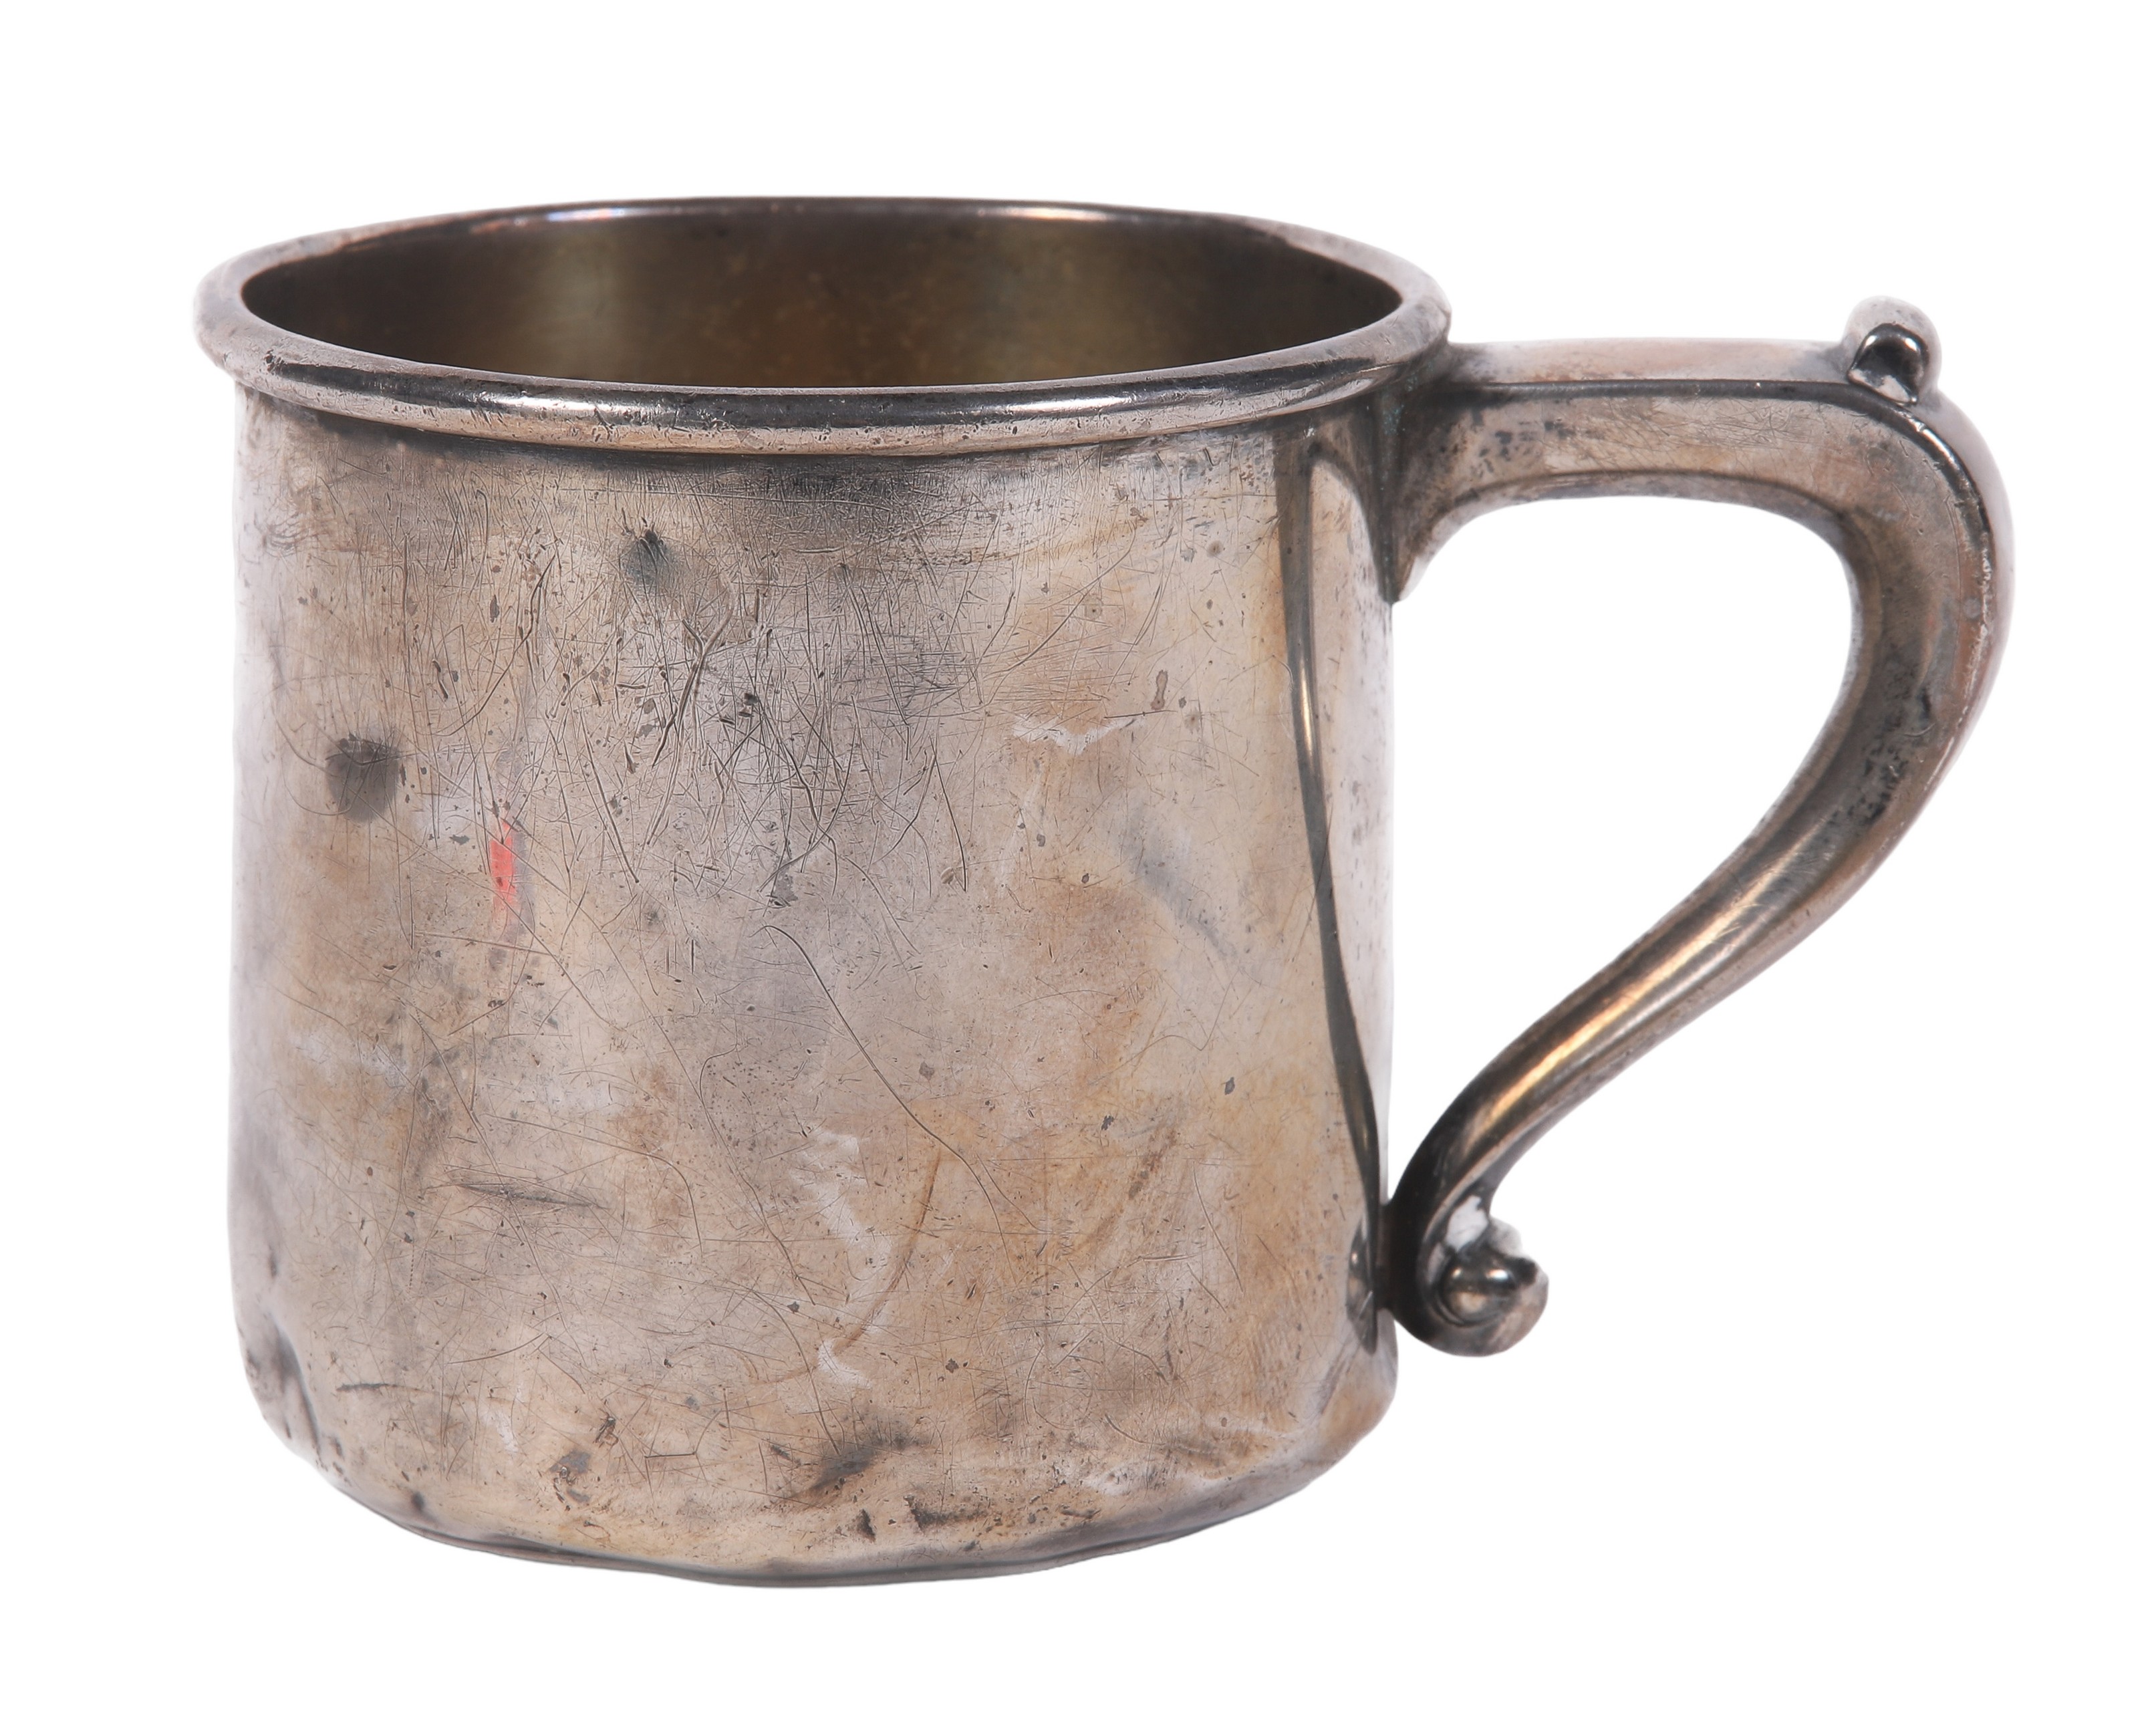 Gorham sterling silver childs mug,